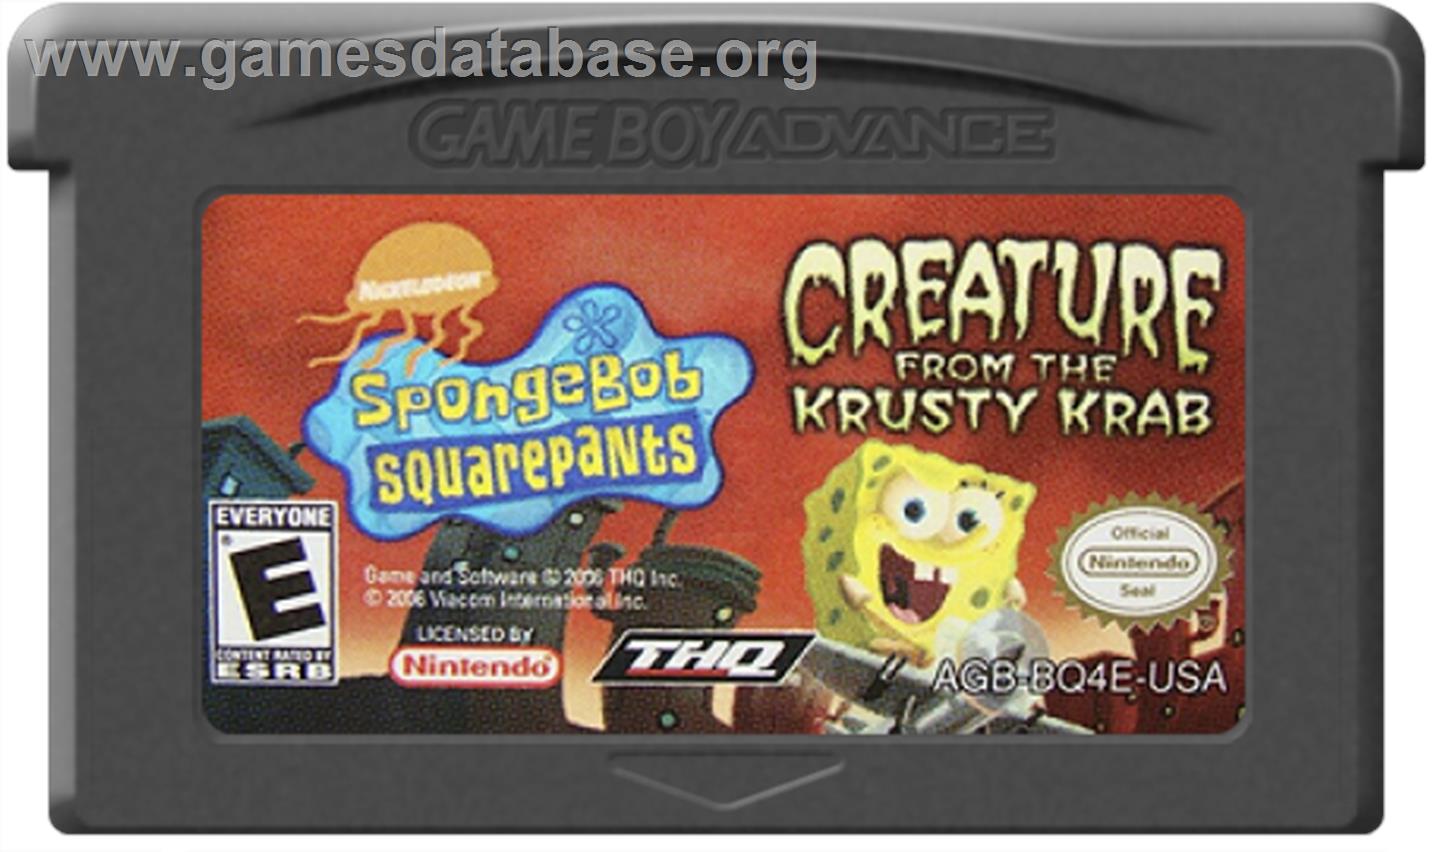 SpongeBob SquarePants: Creature from the Krusty Krab - Nintendo Game Boy Advance - Artwork - Cartridge